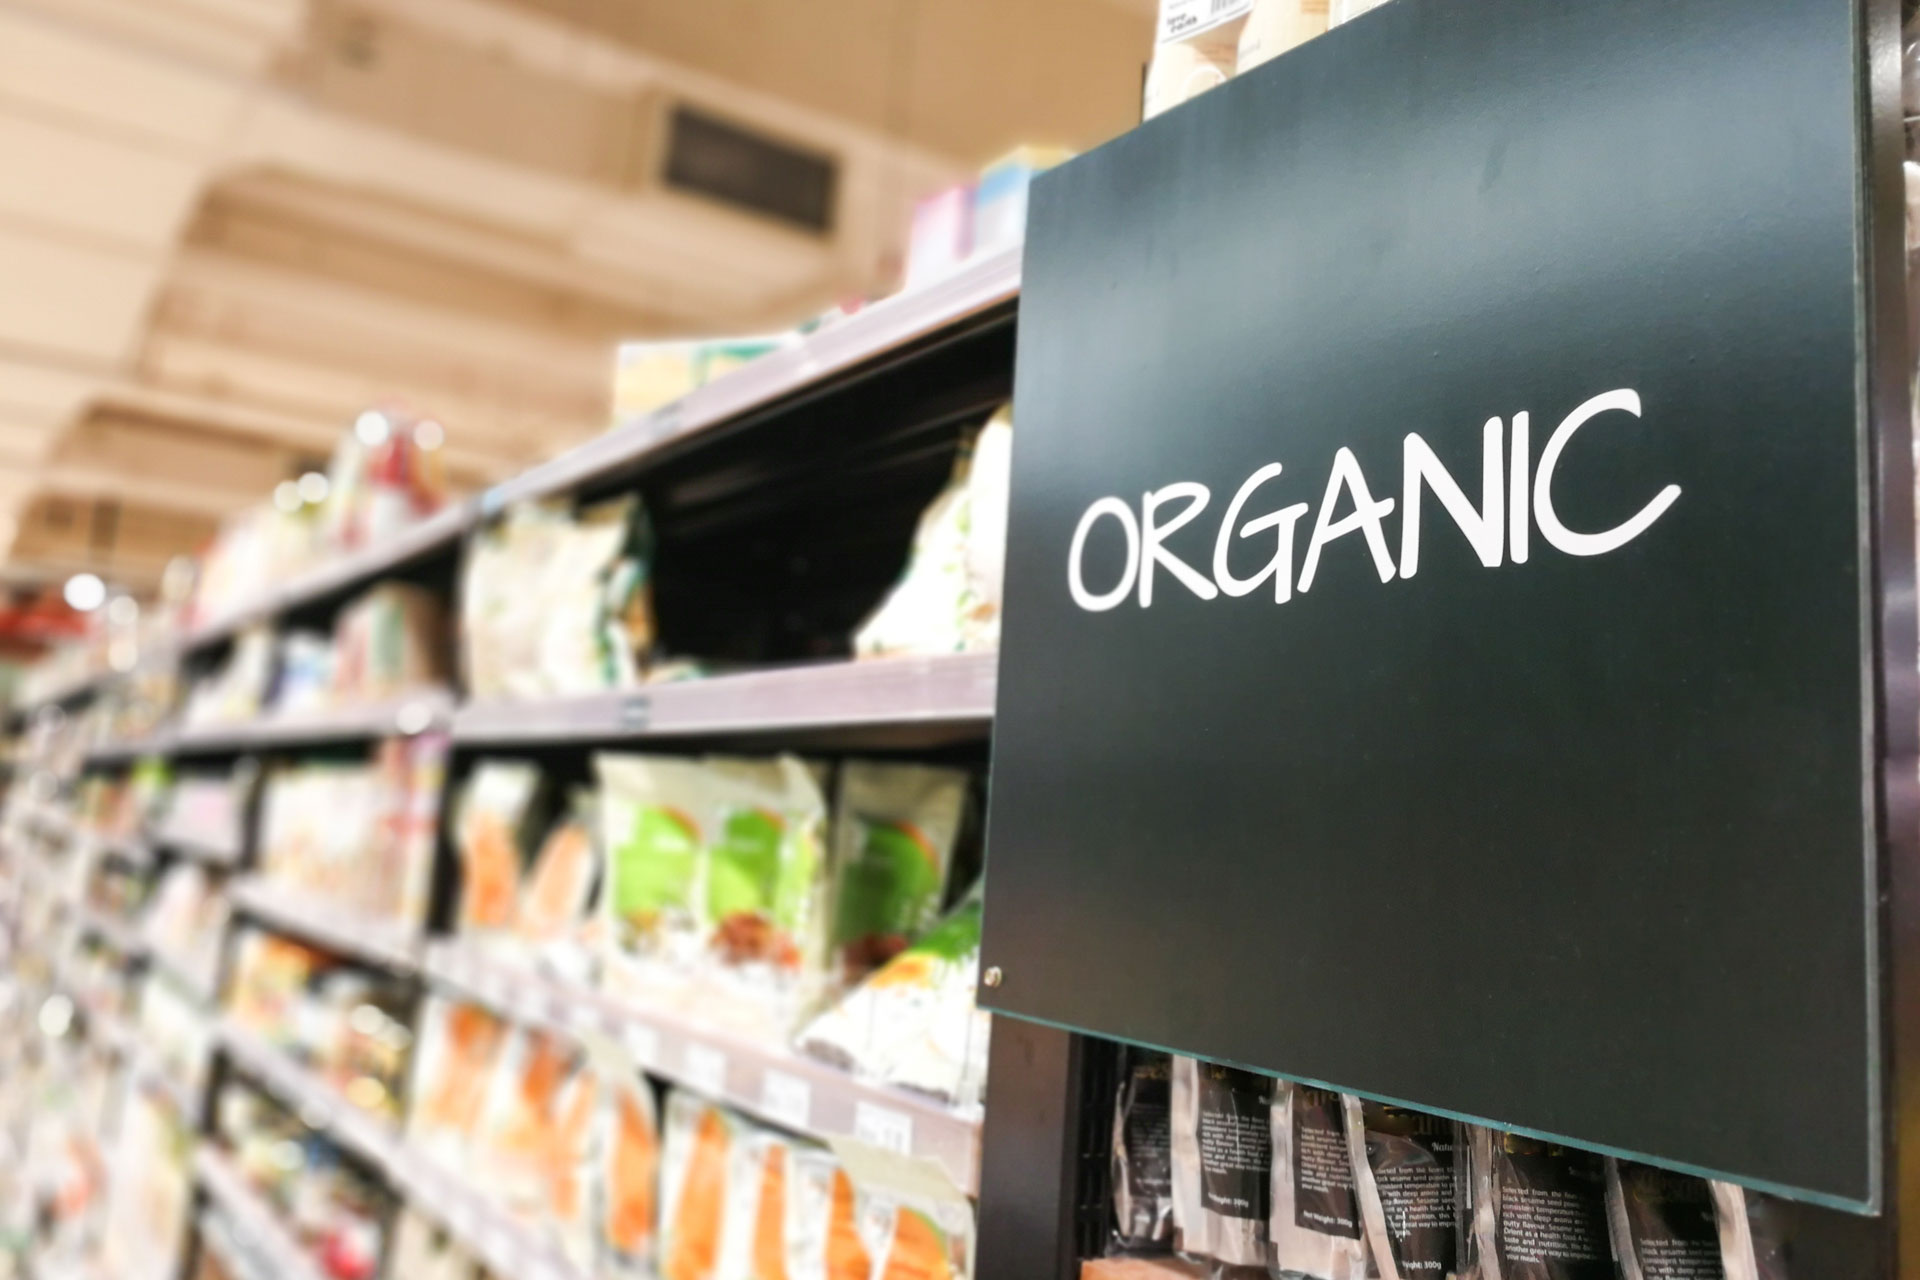 Organic aisle in supermarket